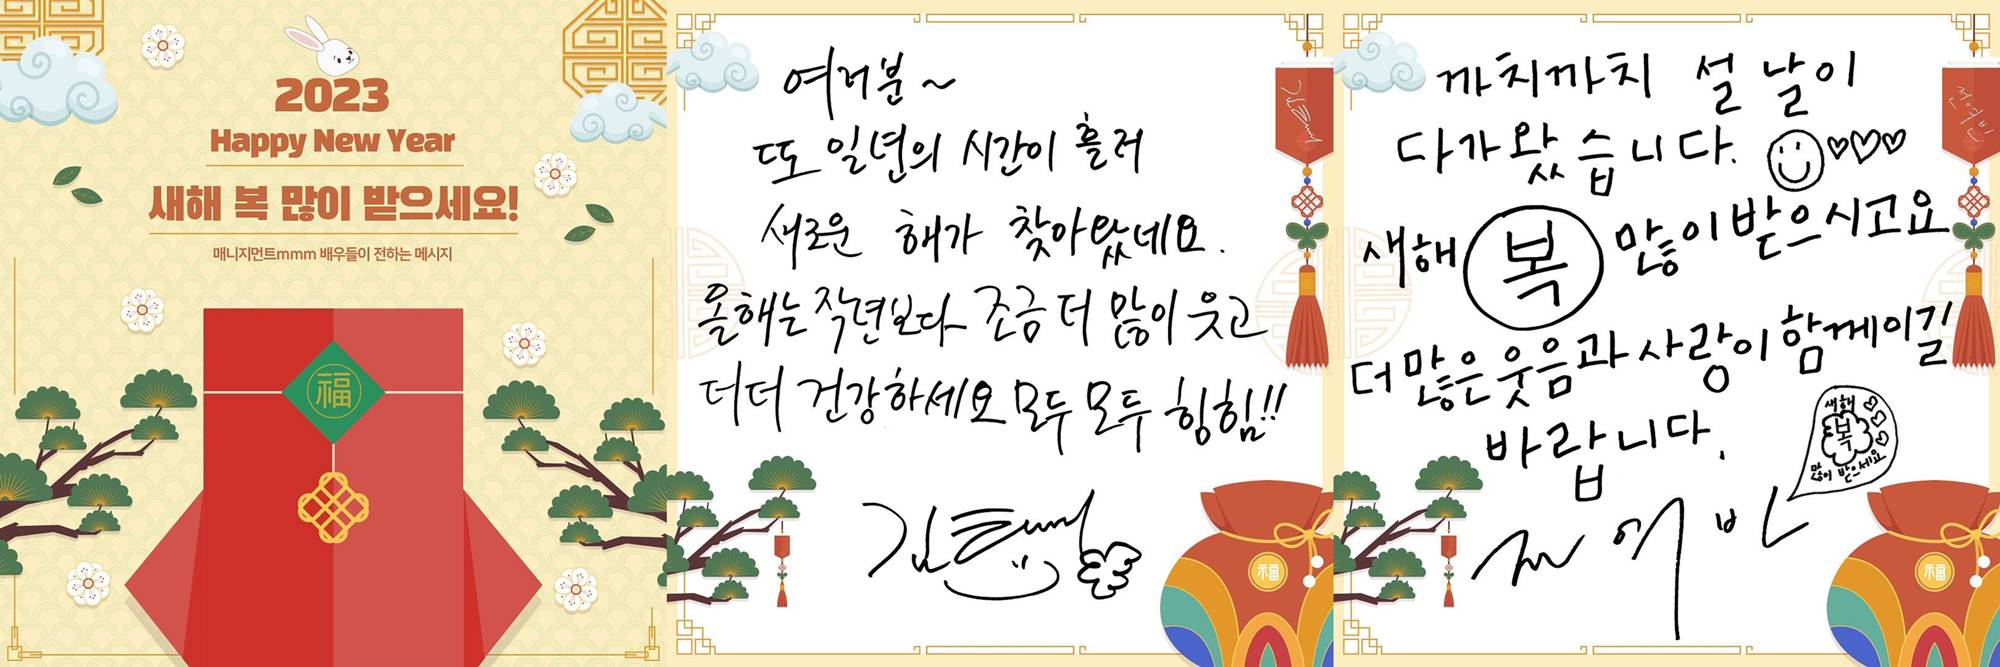 Kim Tae Ri dan Jeon Yeo Bin menulis pesan untuk merayakan Imlek